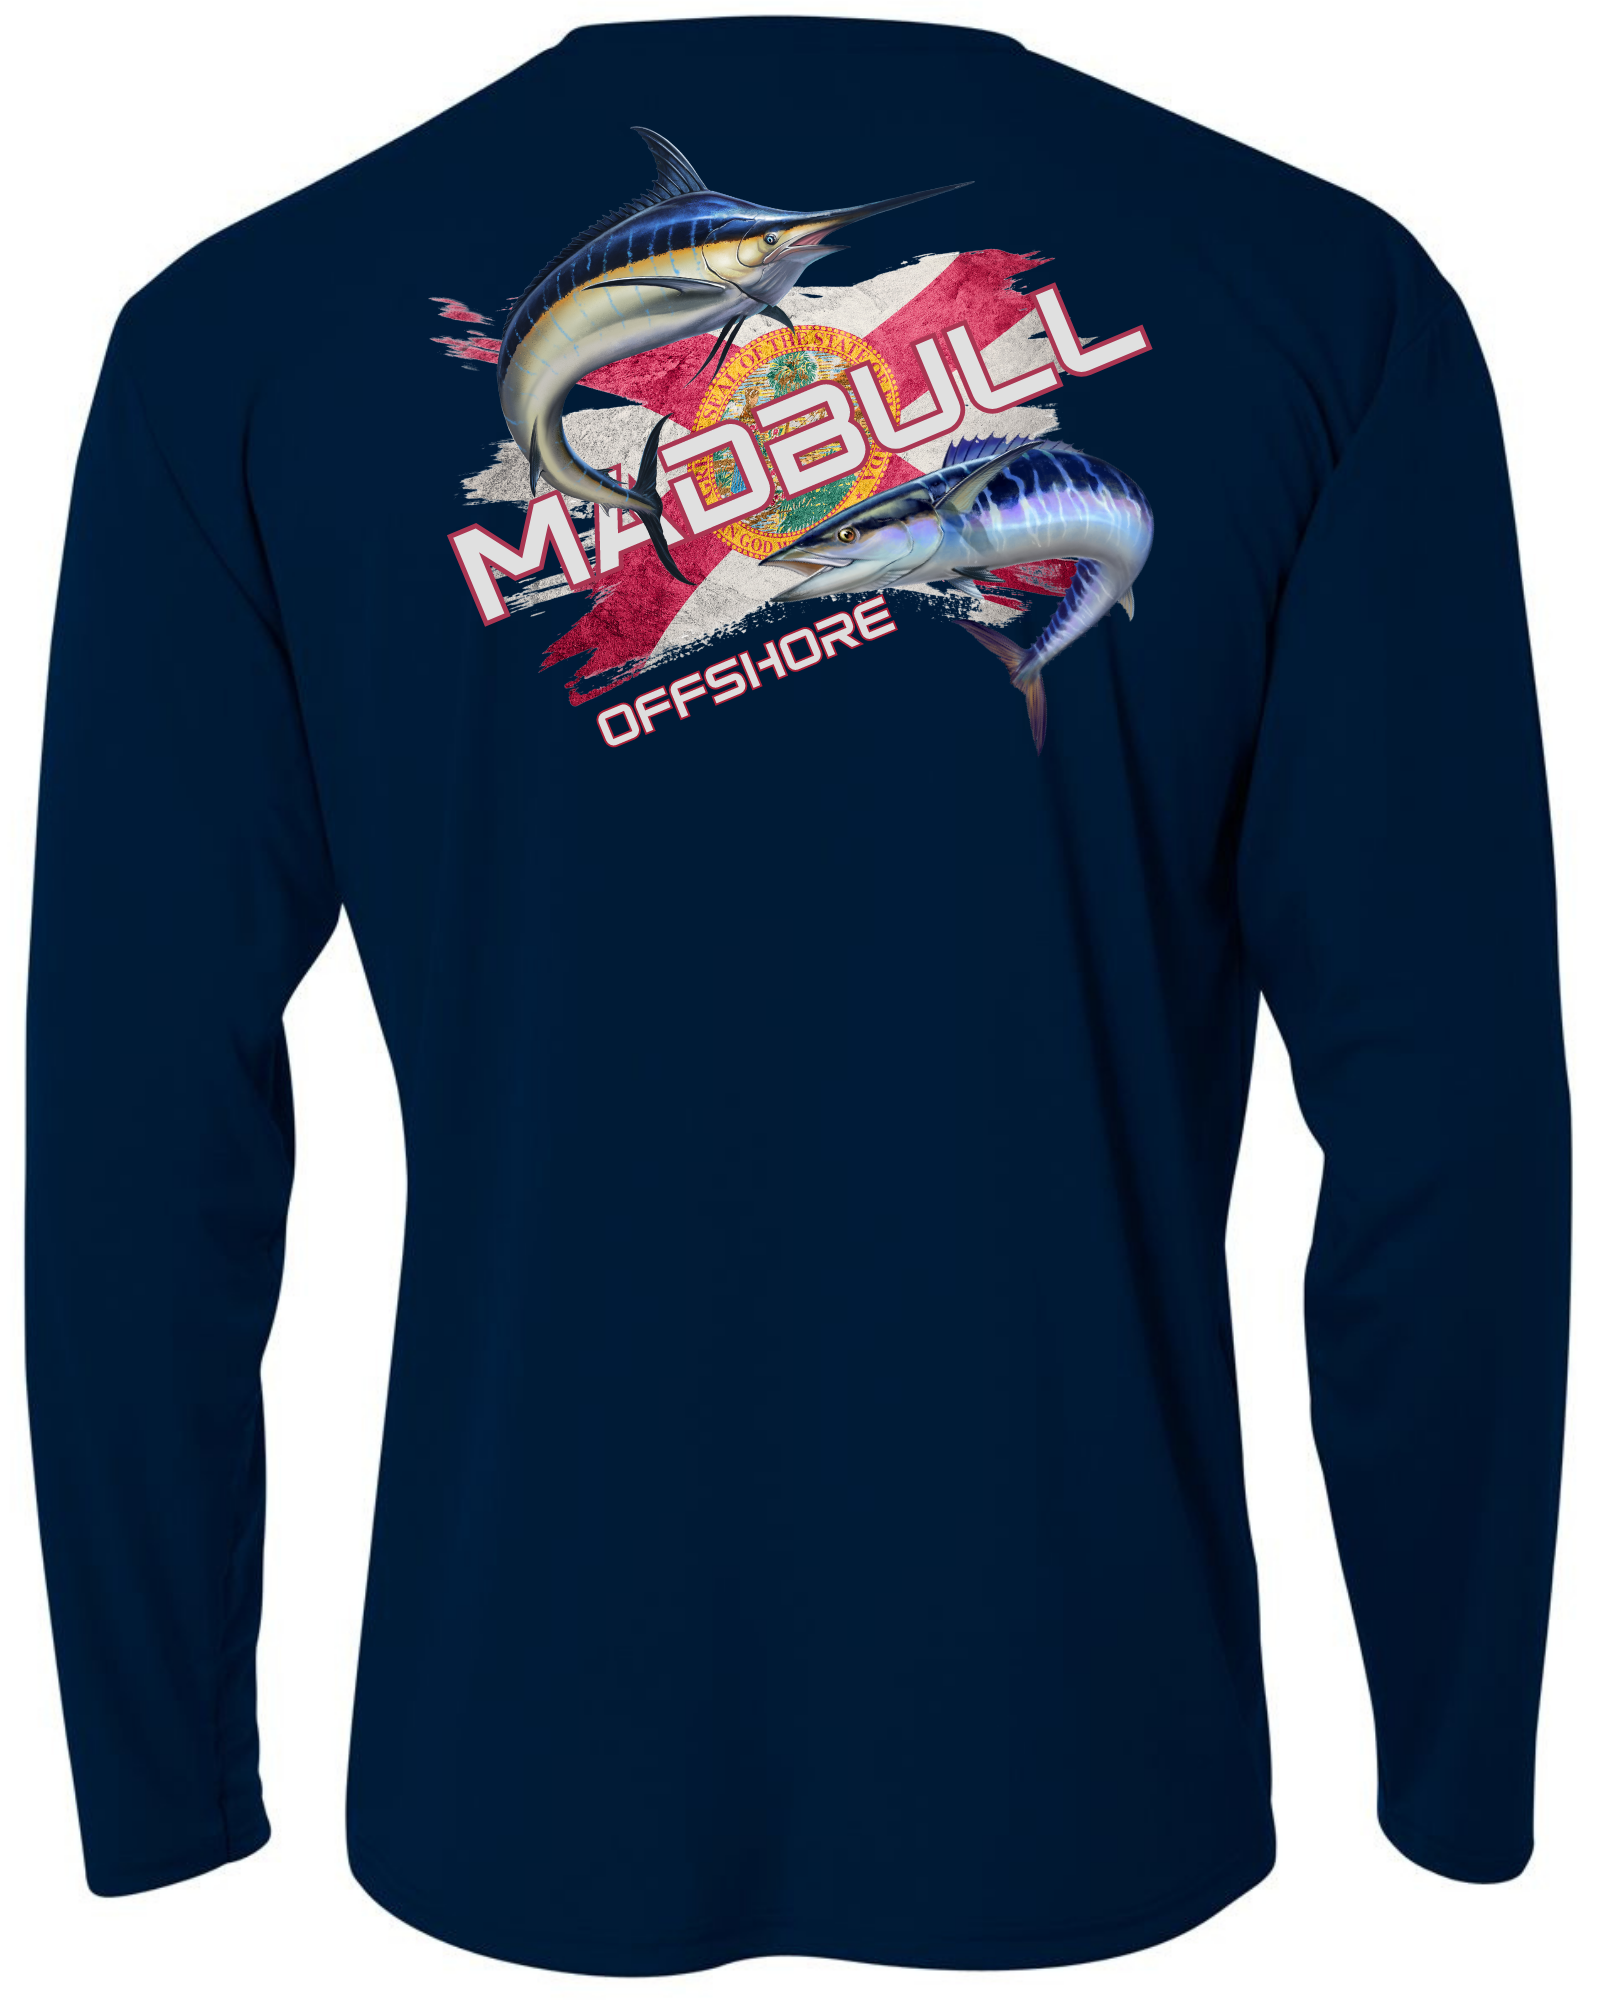 MadBull Florida Anglers Performance Fishing Shirt